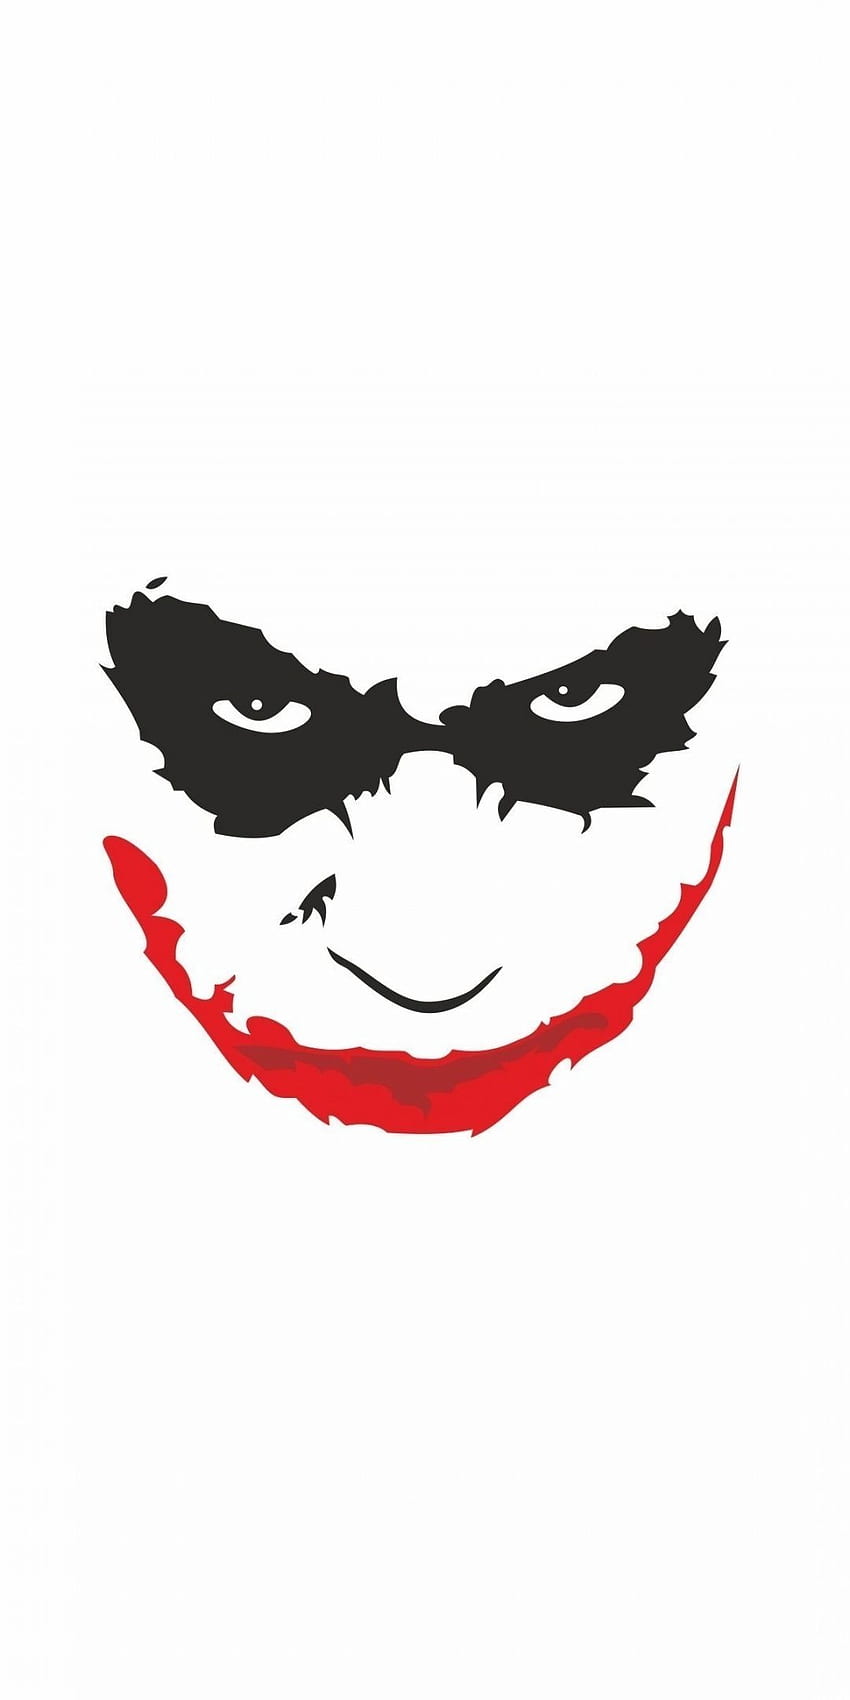 Joker sketch by myconius on DeviantArt